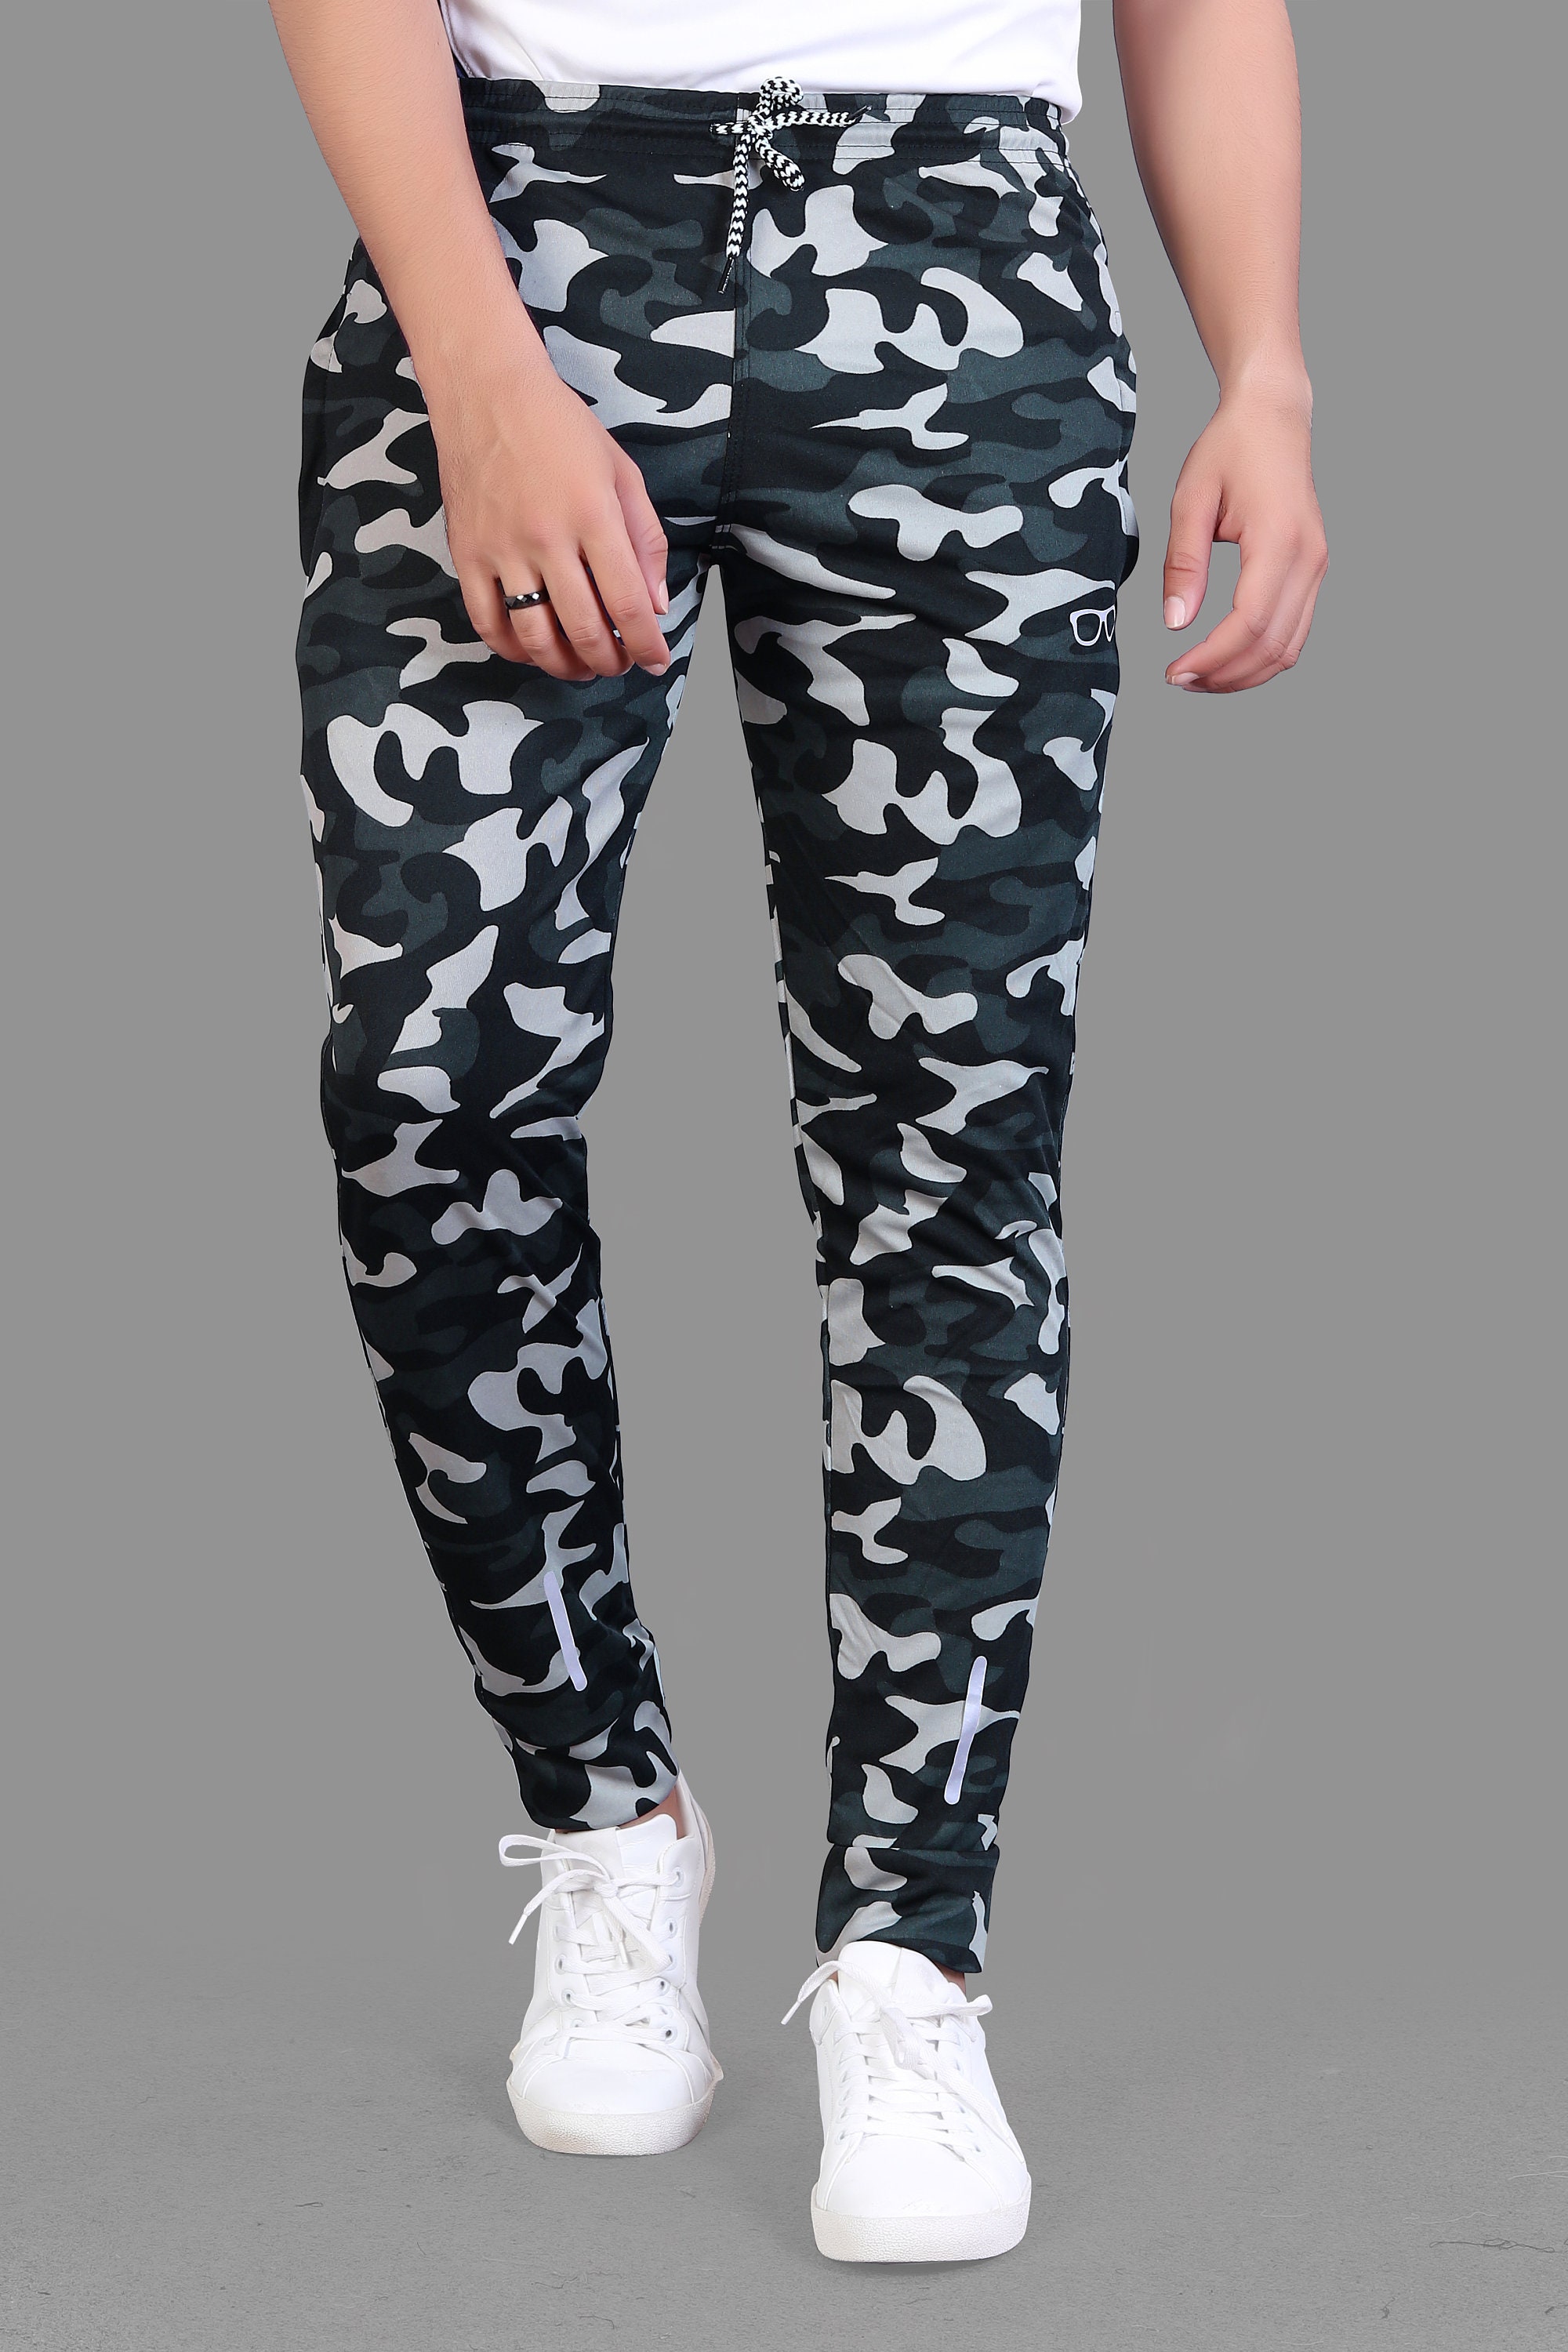 Buy Girls Camouflage Twill Joggers Online at Sassafras